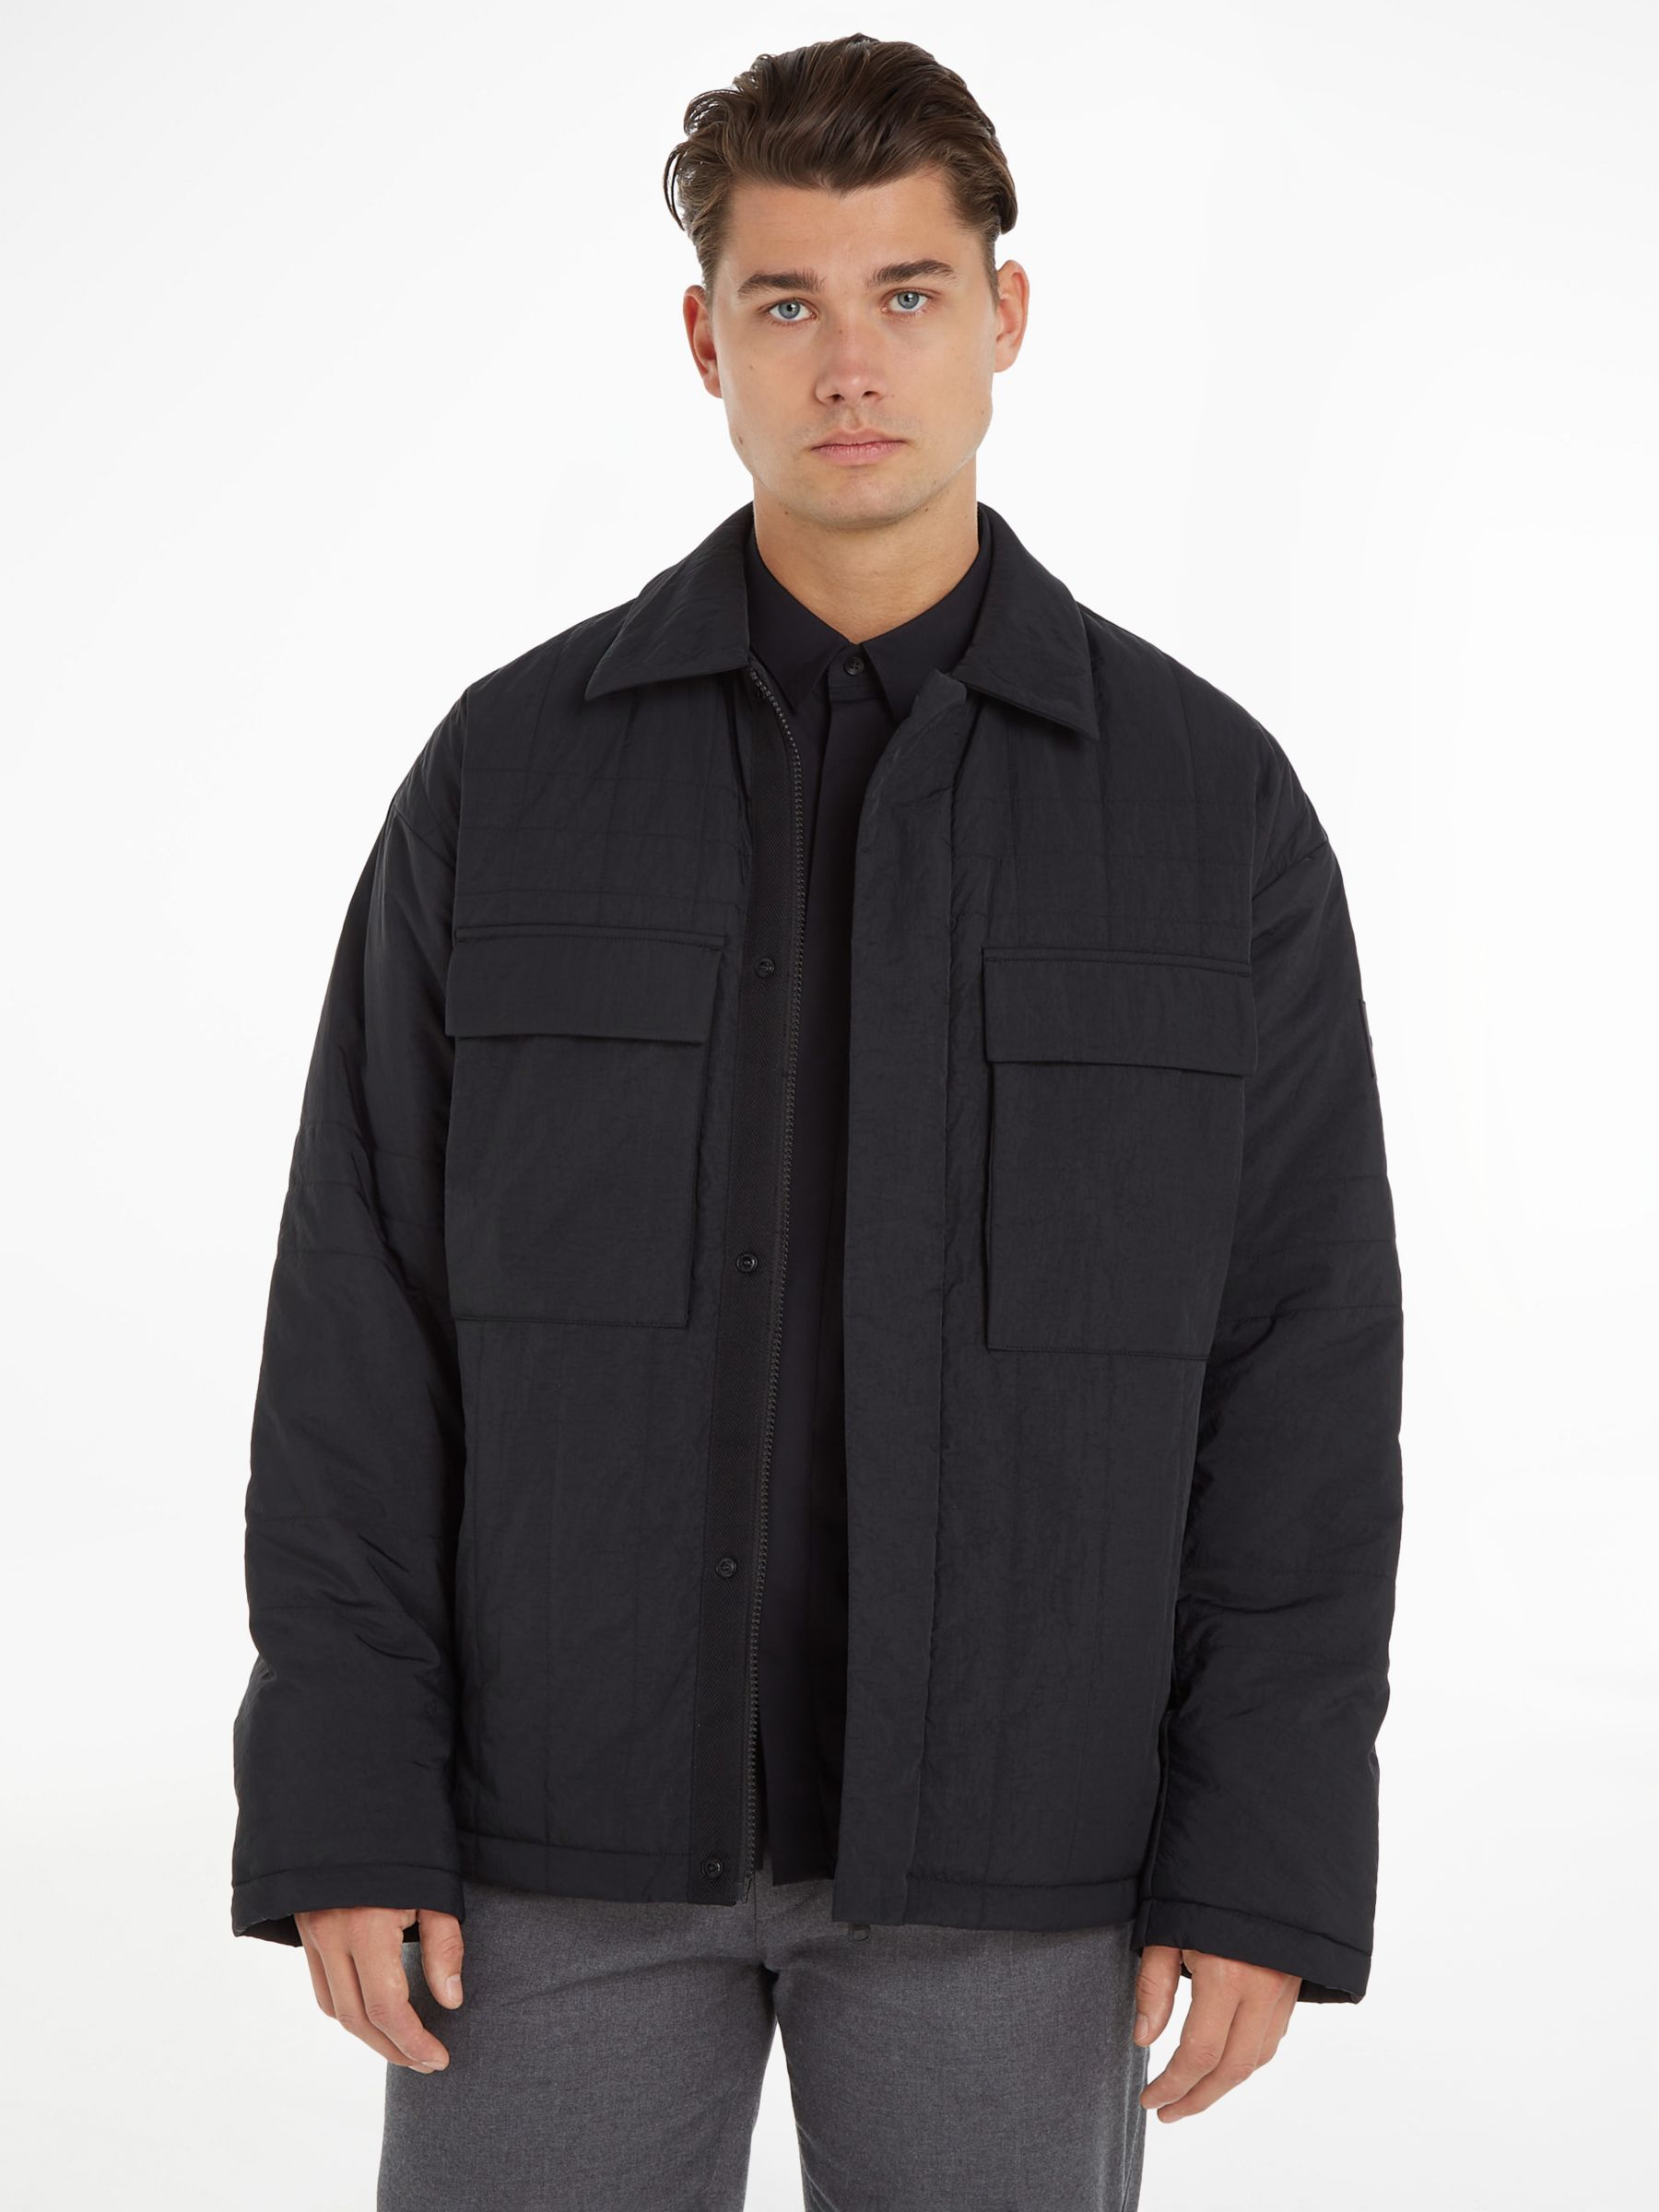 Calvin Klein Quilted Utility Jacket, CK Black, S